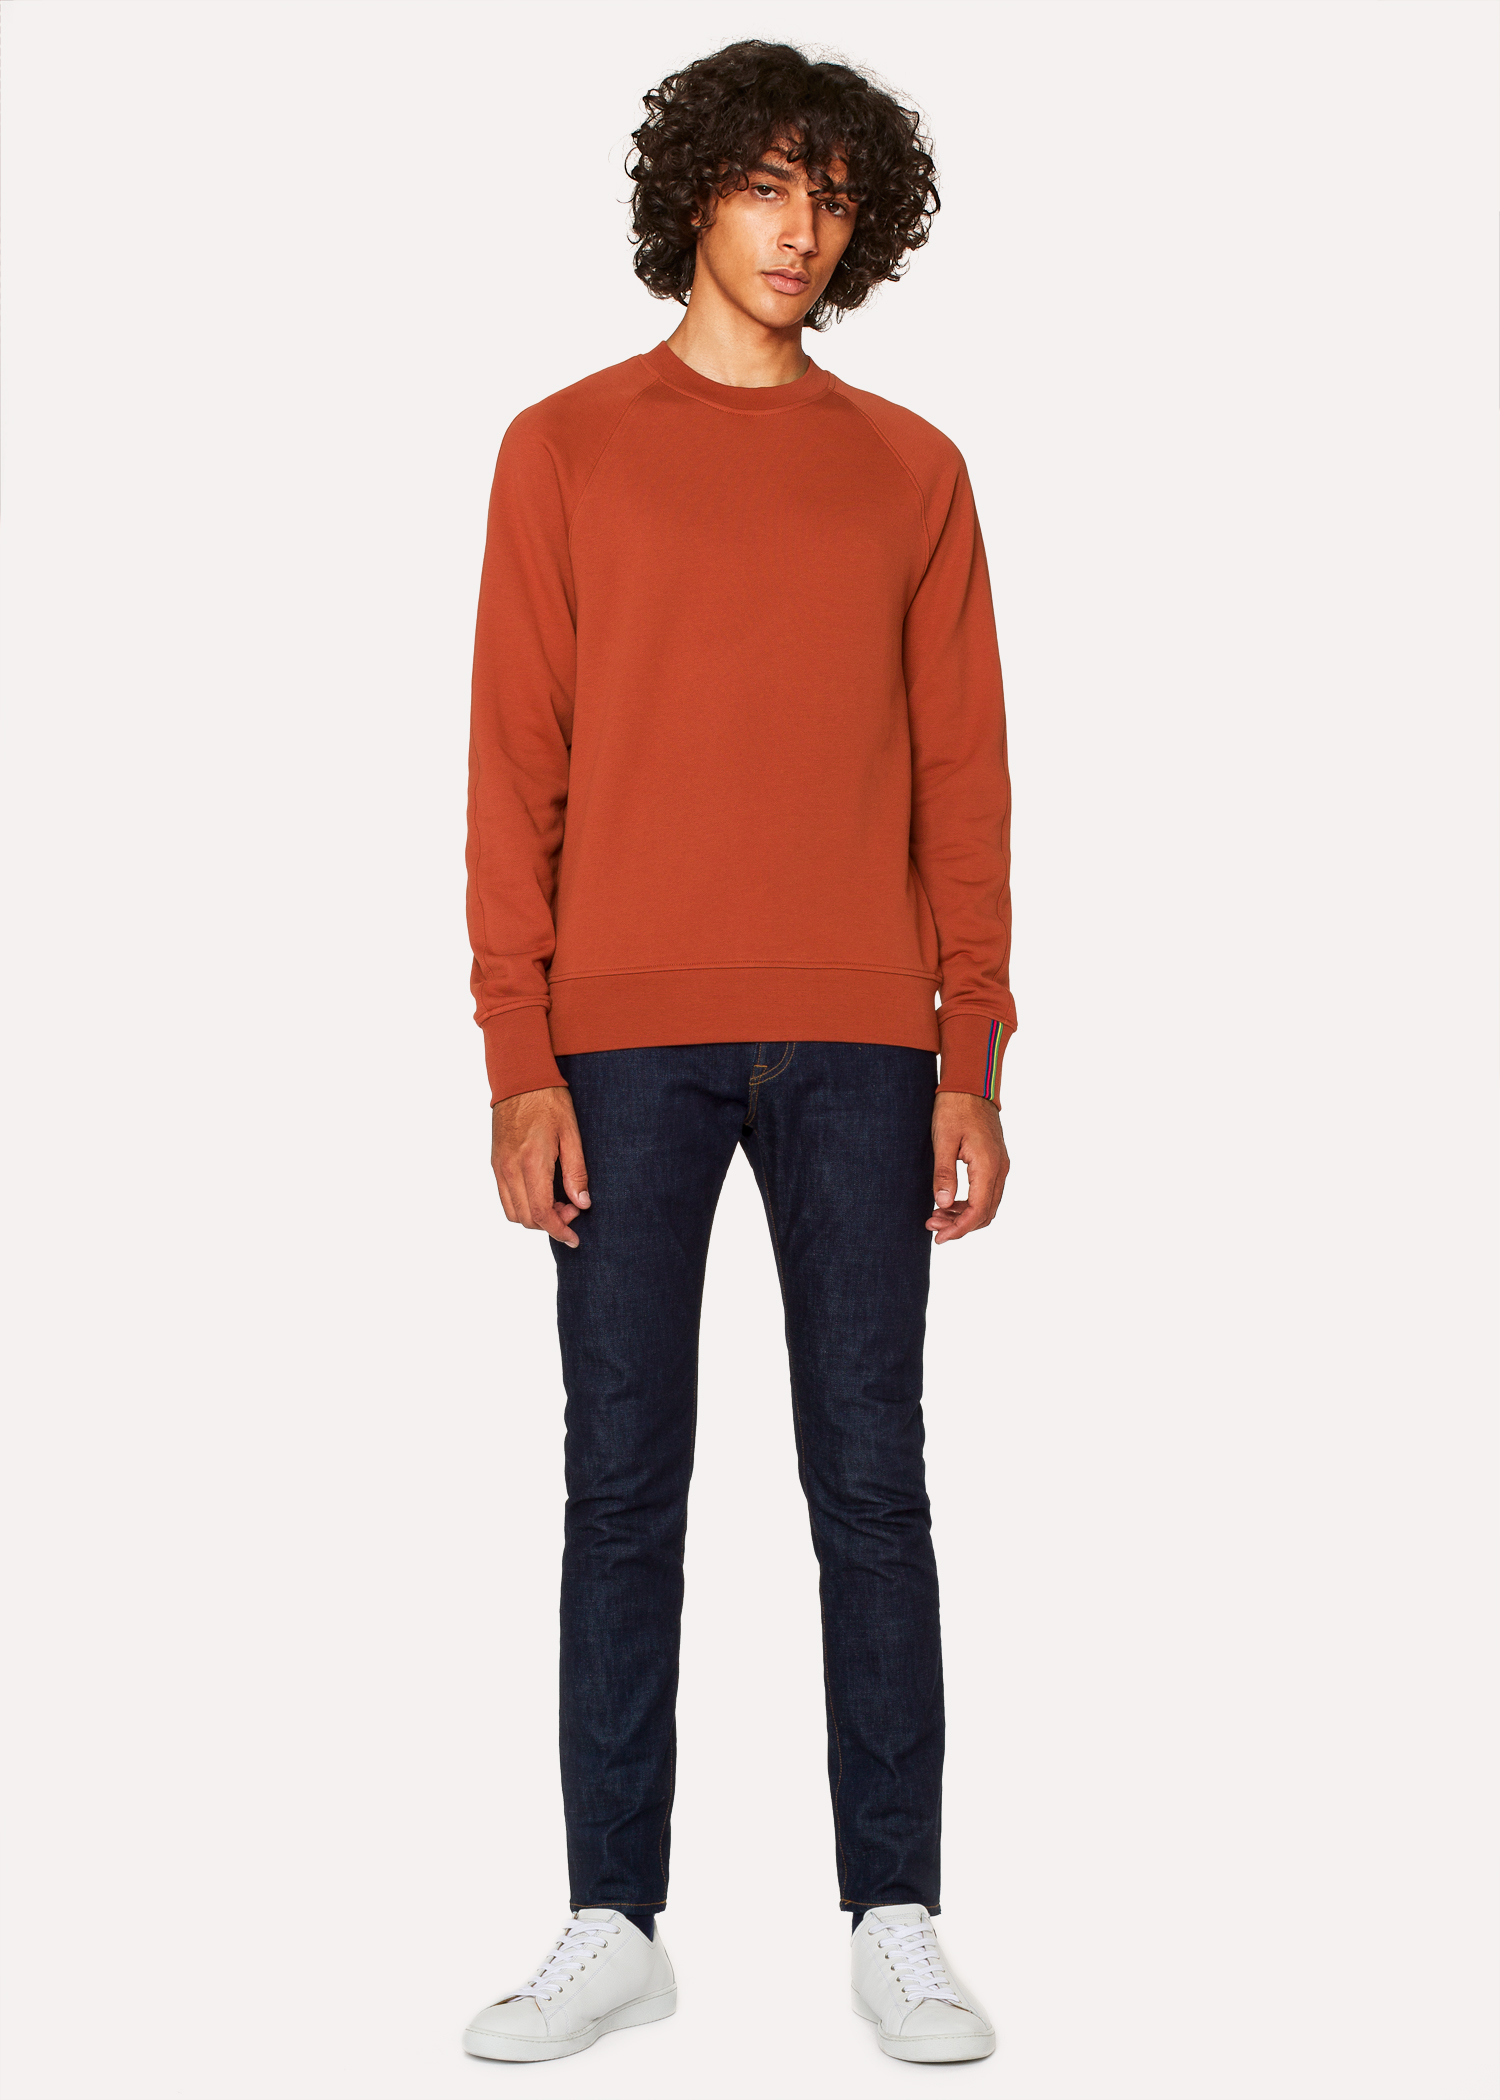 Men's Burnt Orange Cotton Raglan Sweatshirt - Paul Smith